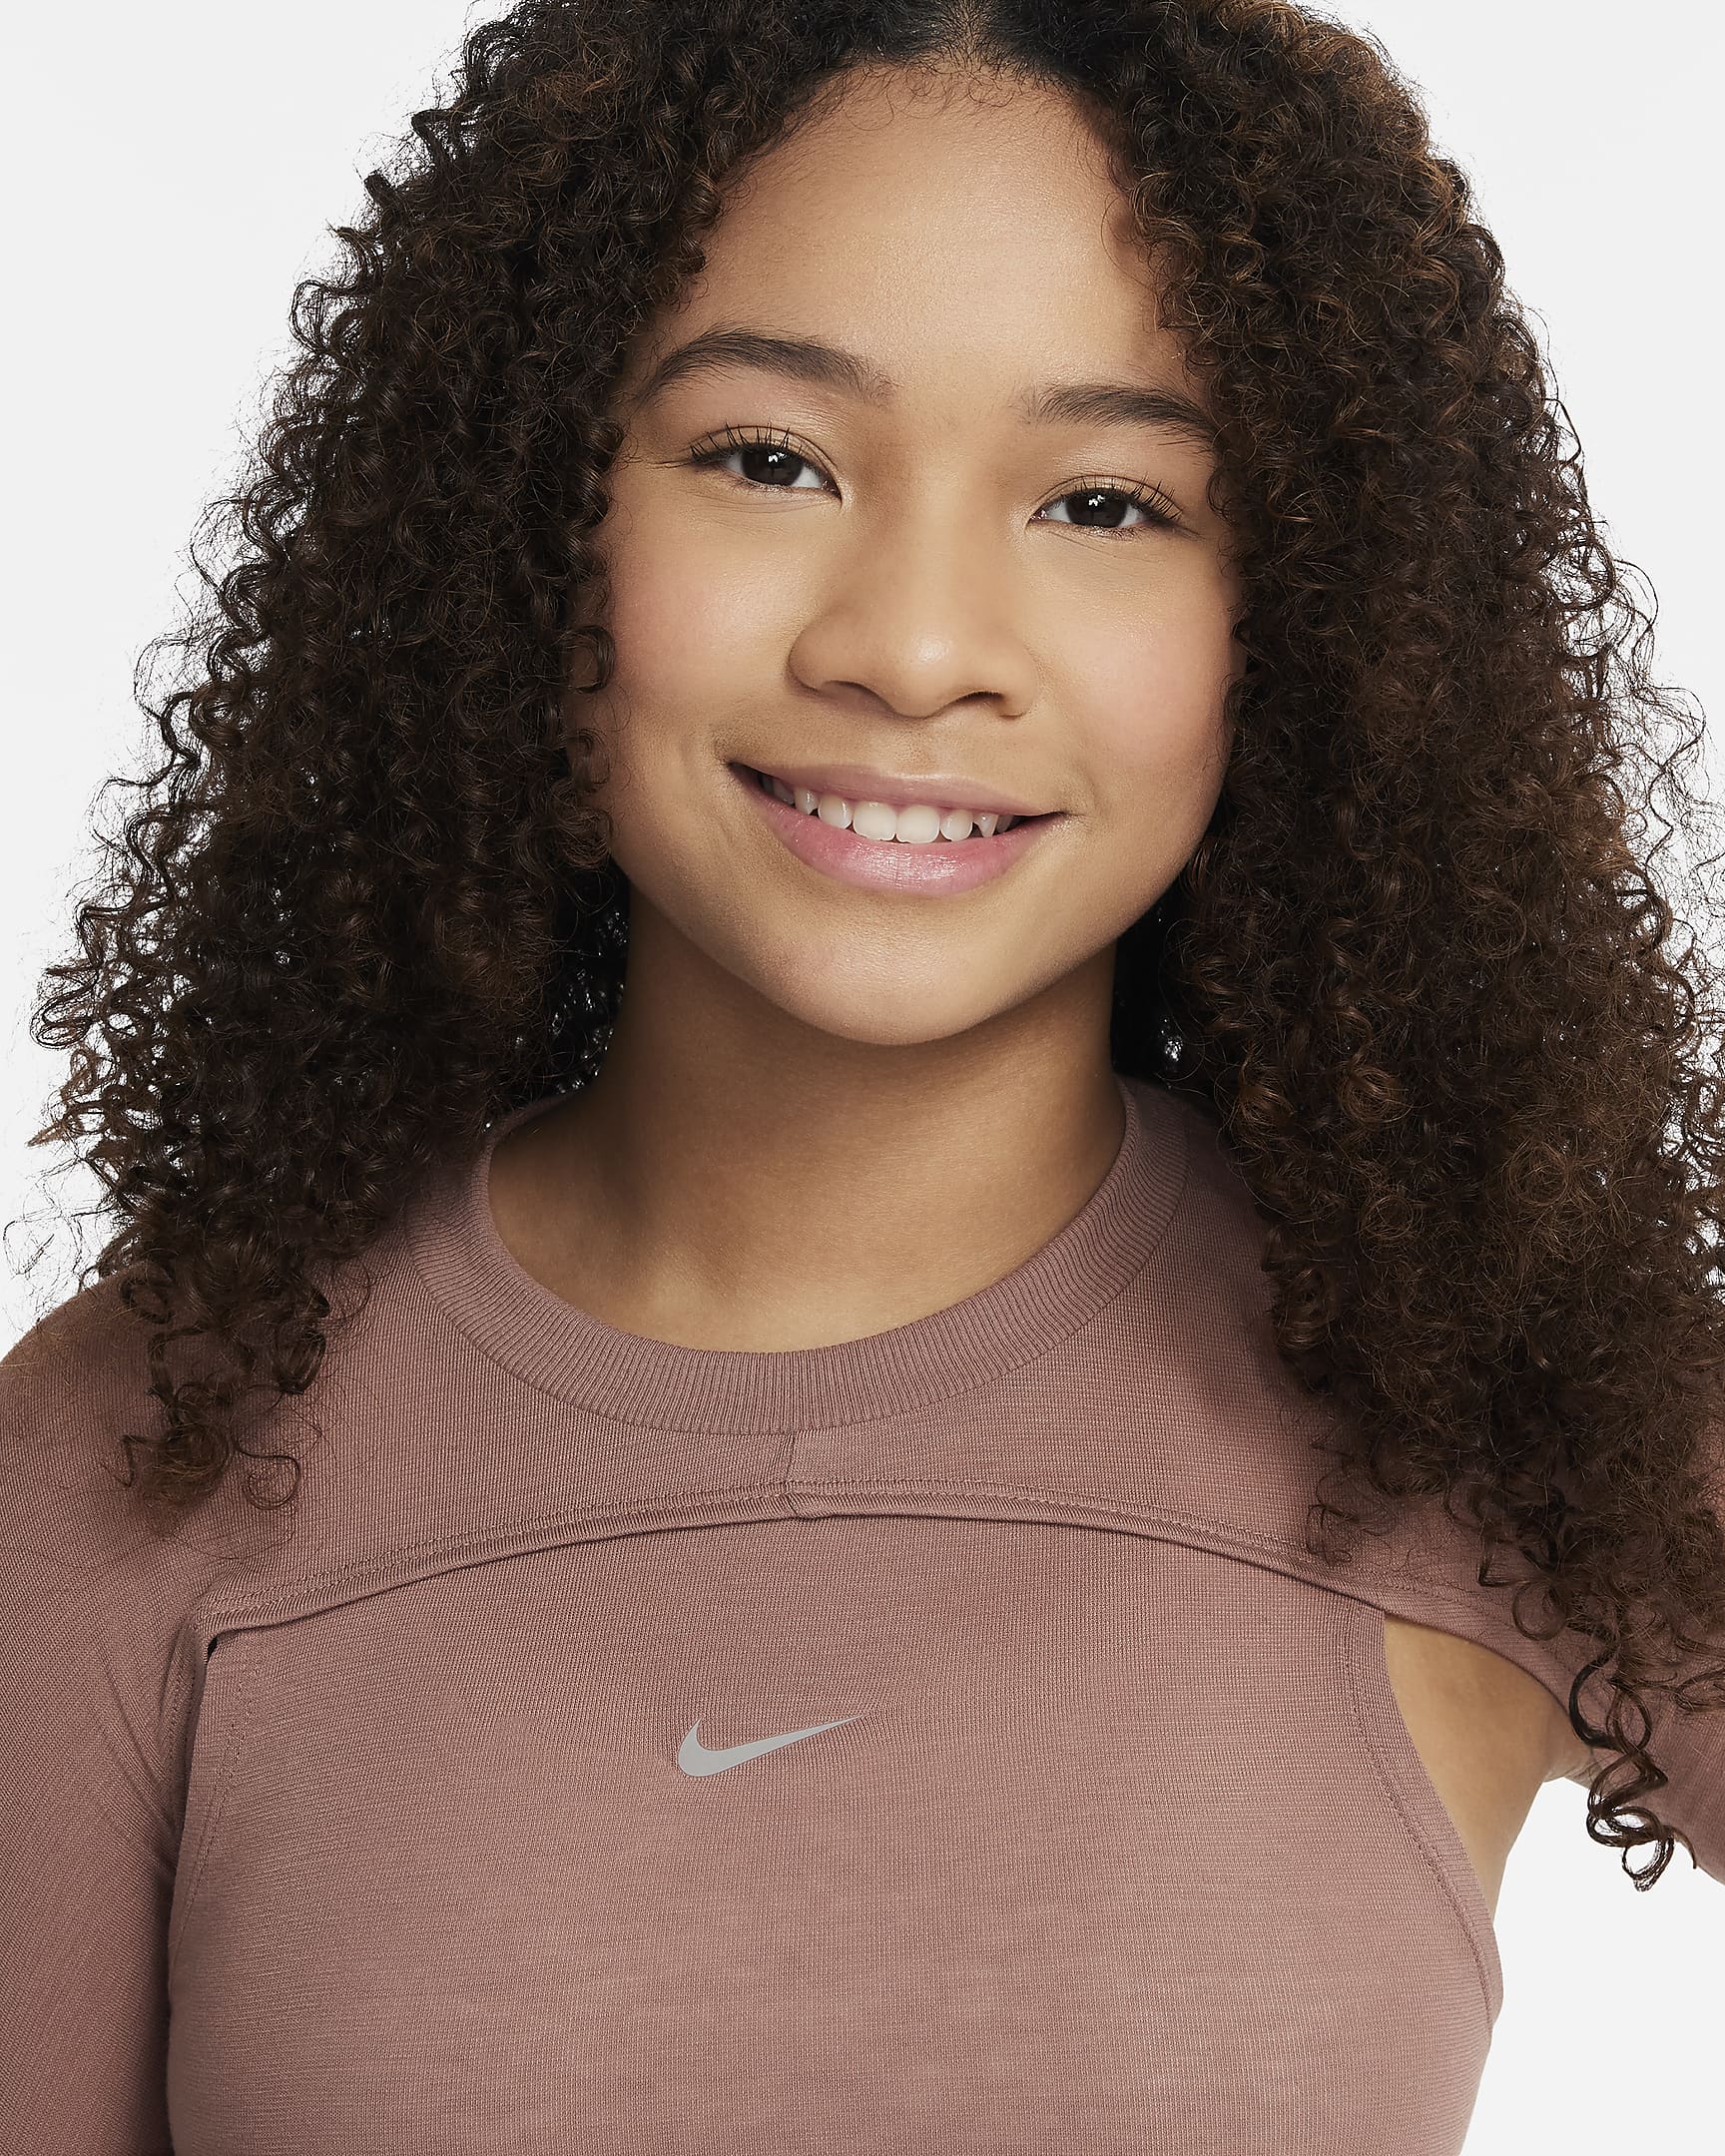 Nike Girls' Dri-FIT Long-Sleeve Top. Nike.com